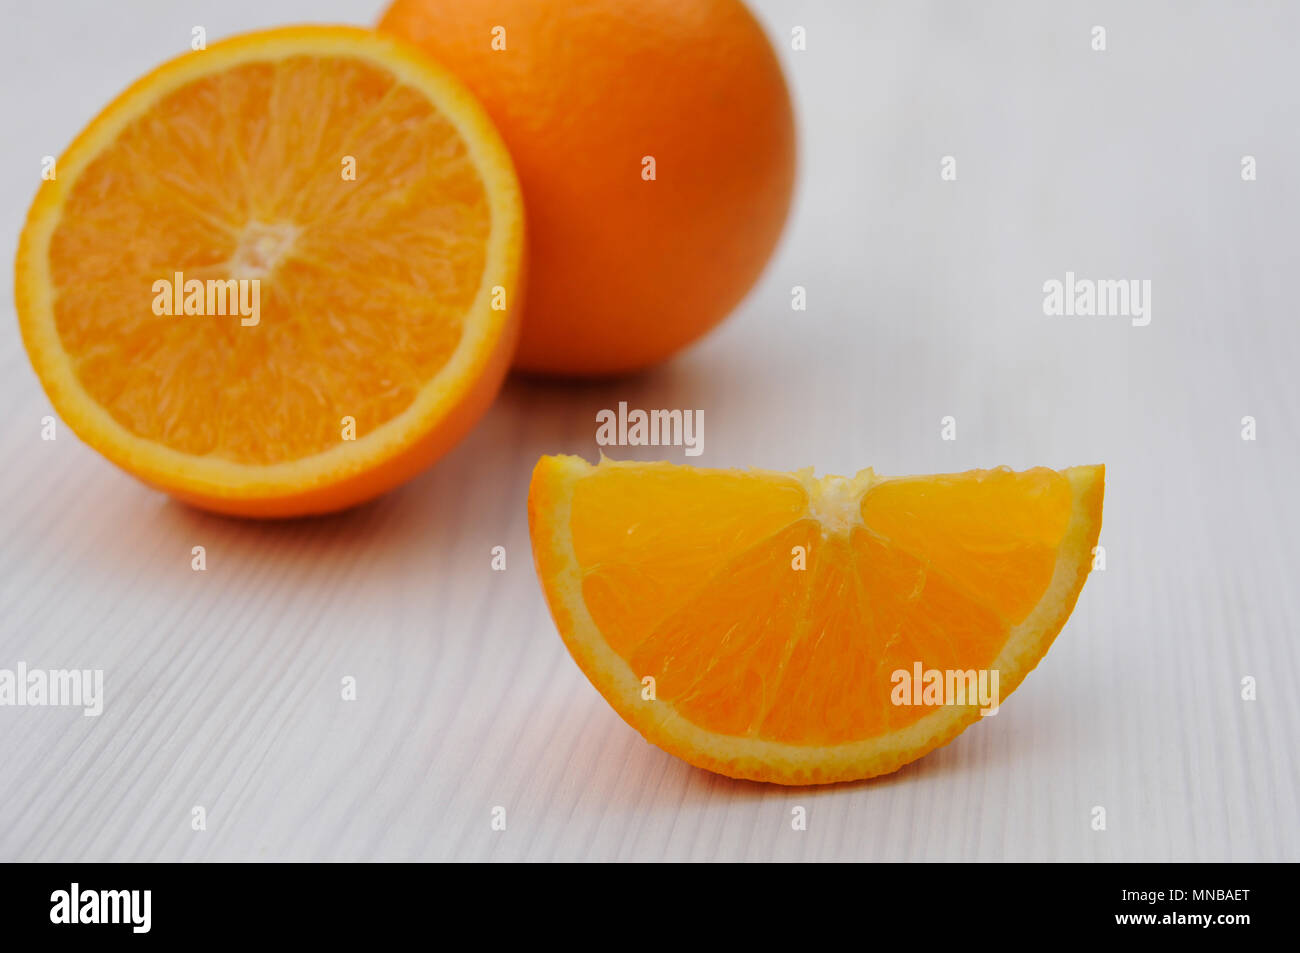 Orange sliced on wooden table Stock Photo